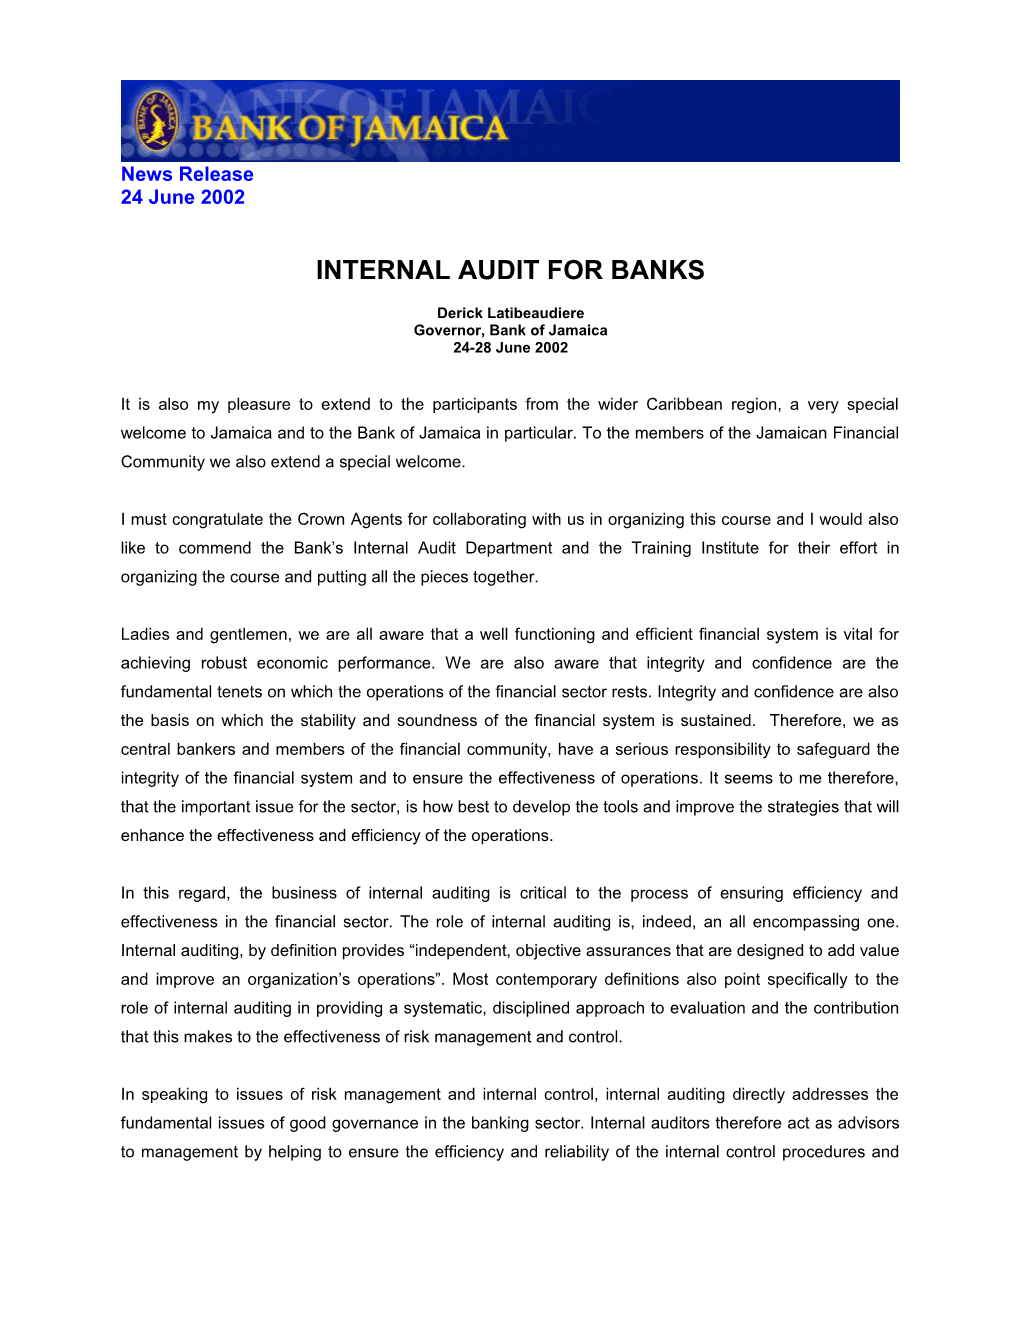 Internal Audit for Banks